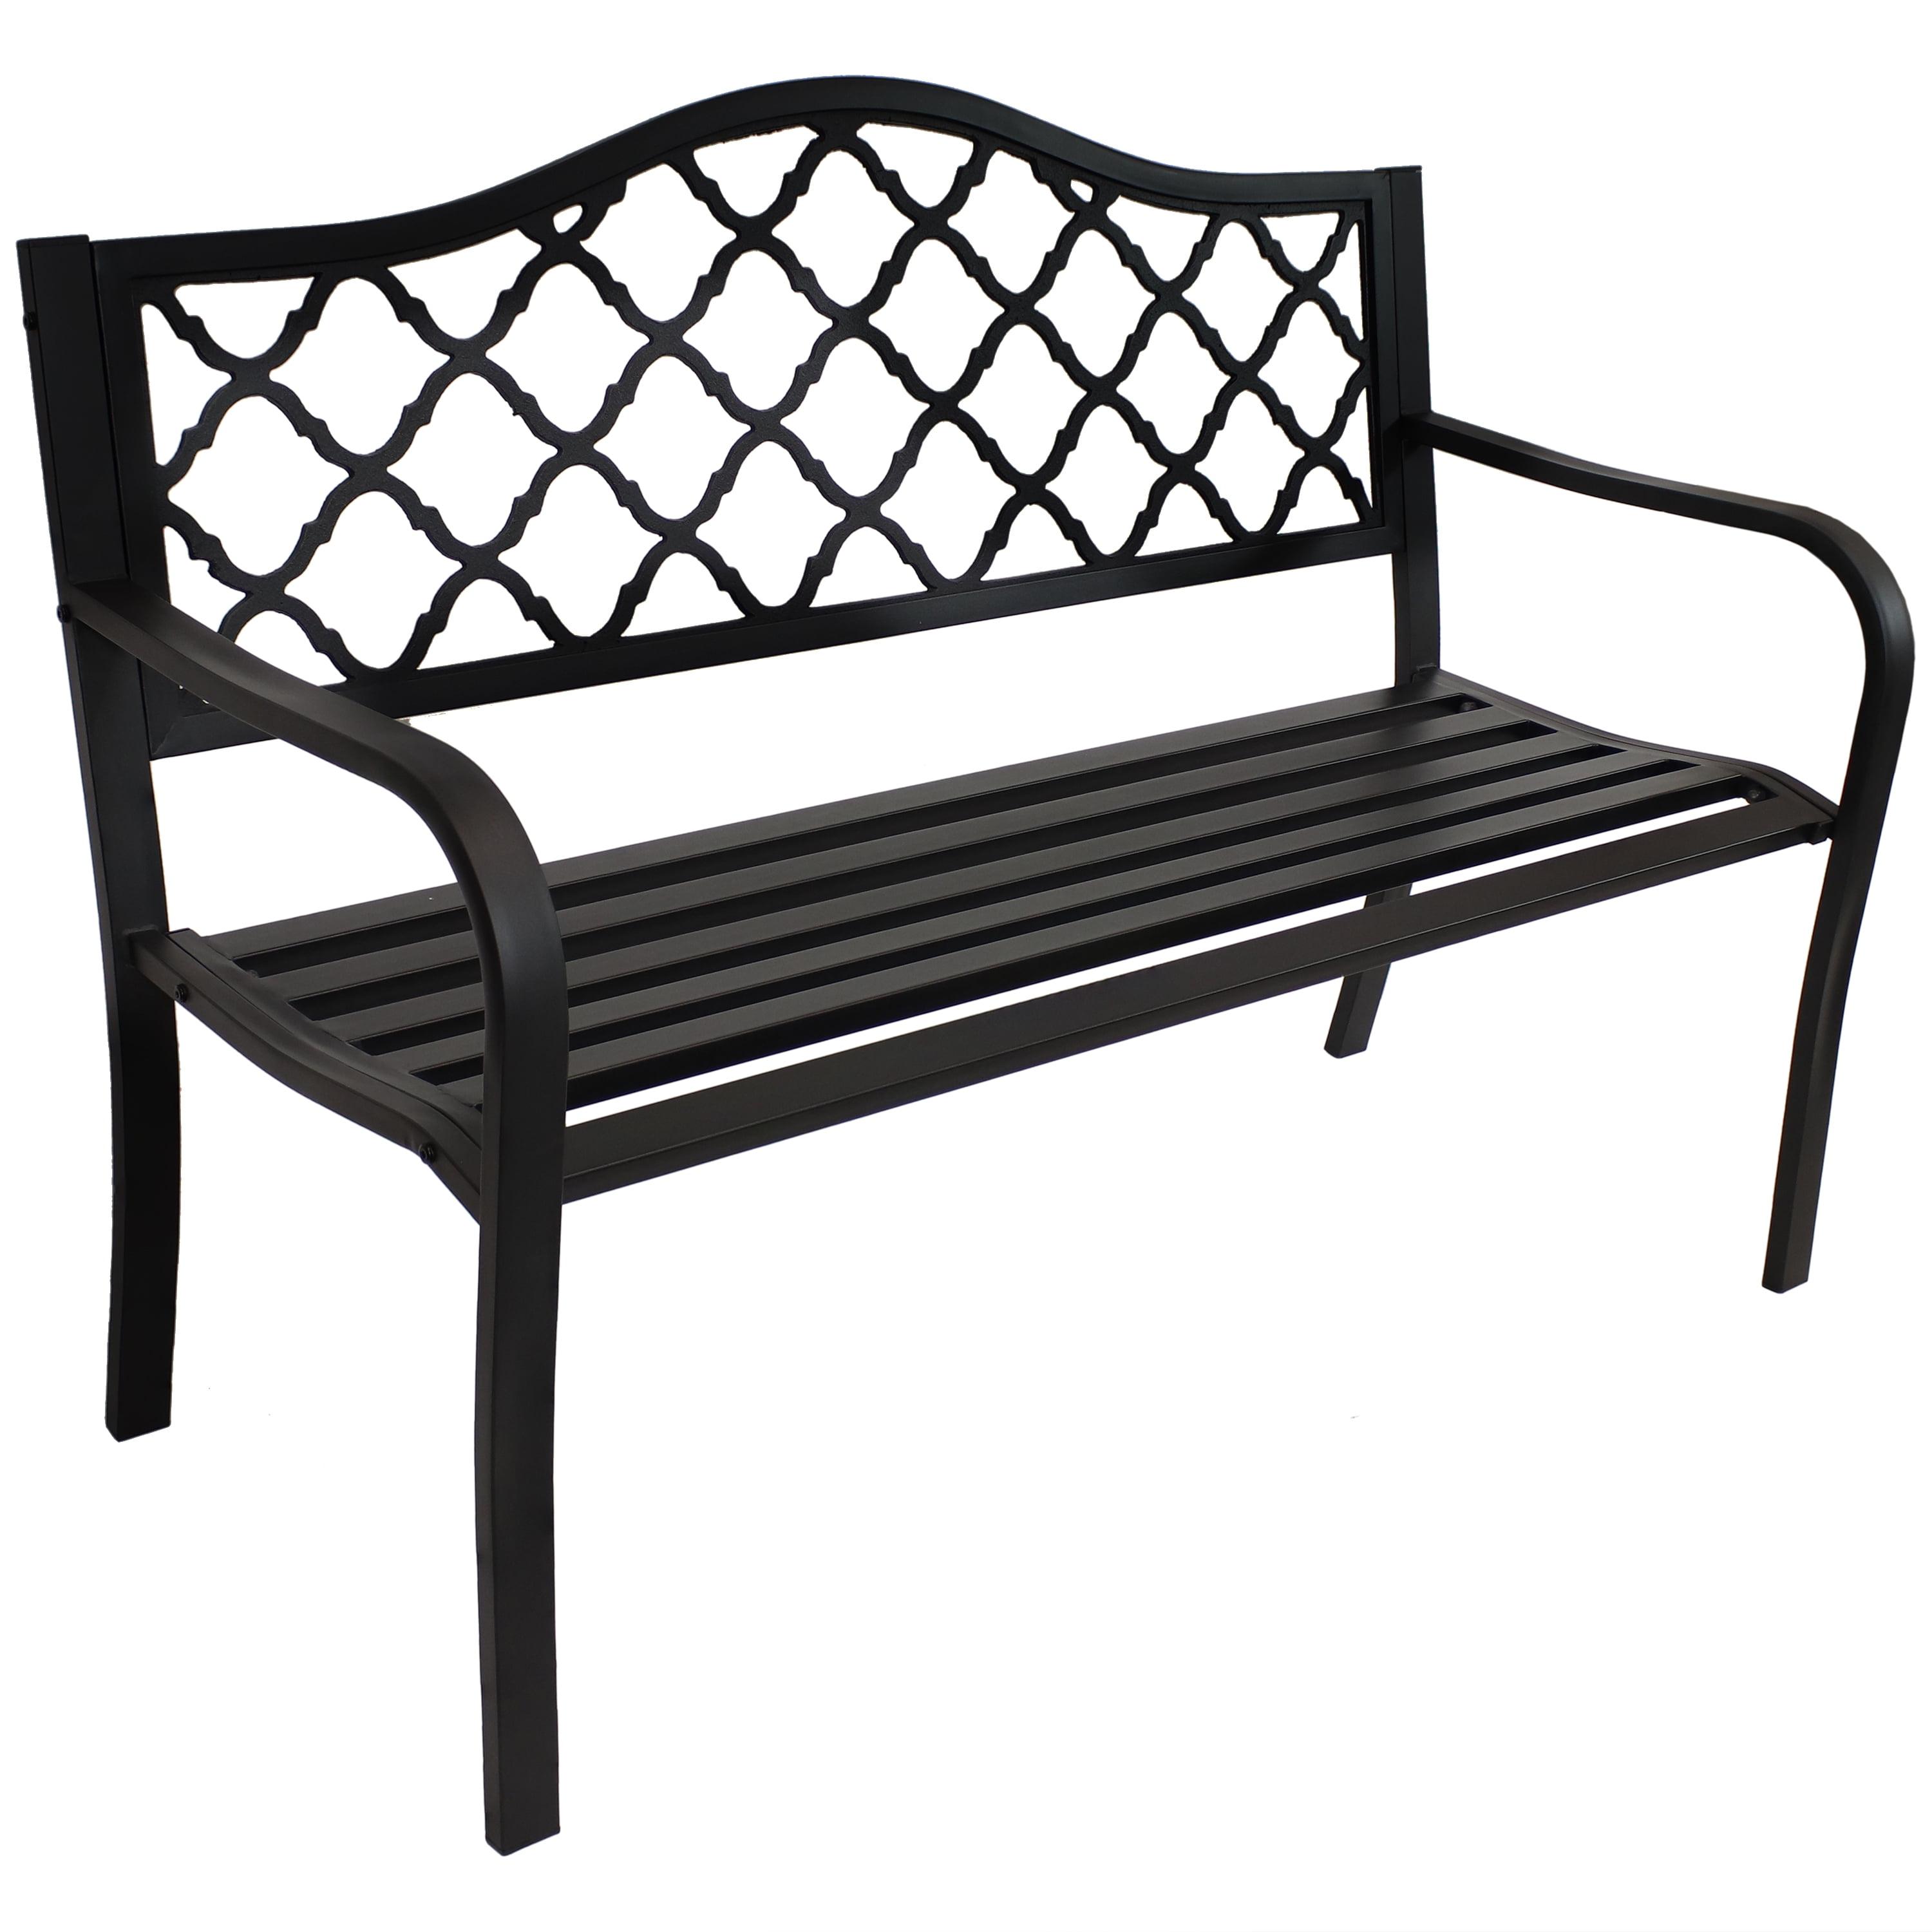 Sunnydaze 50-Inch Black Cast Iron Lattice Outdoor Garden Bench